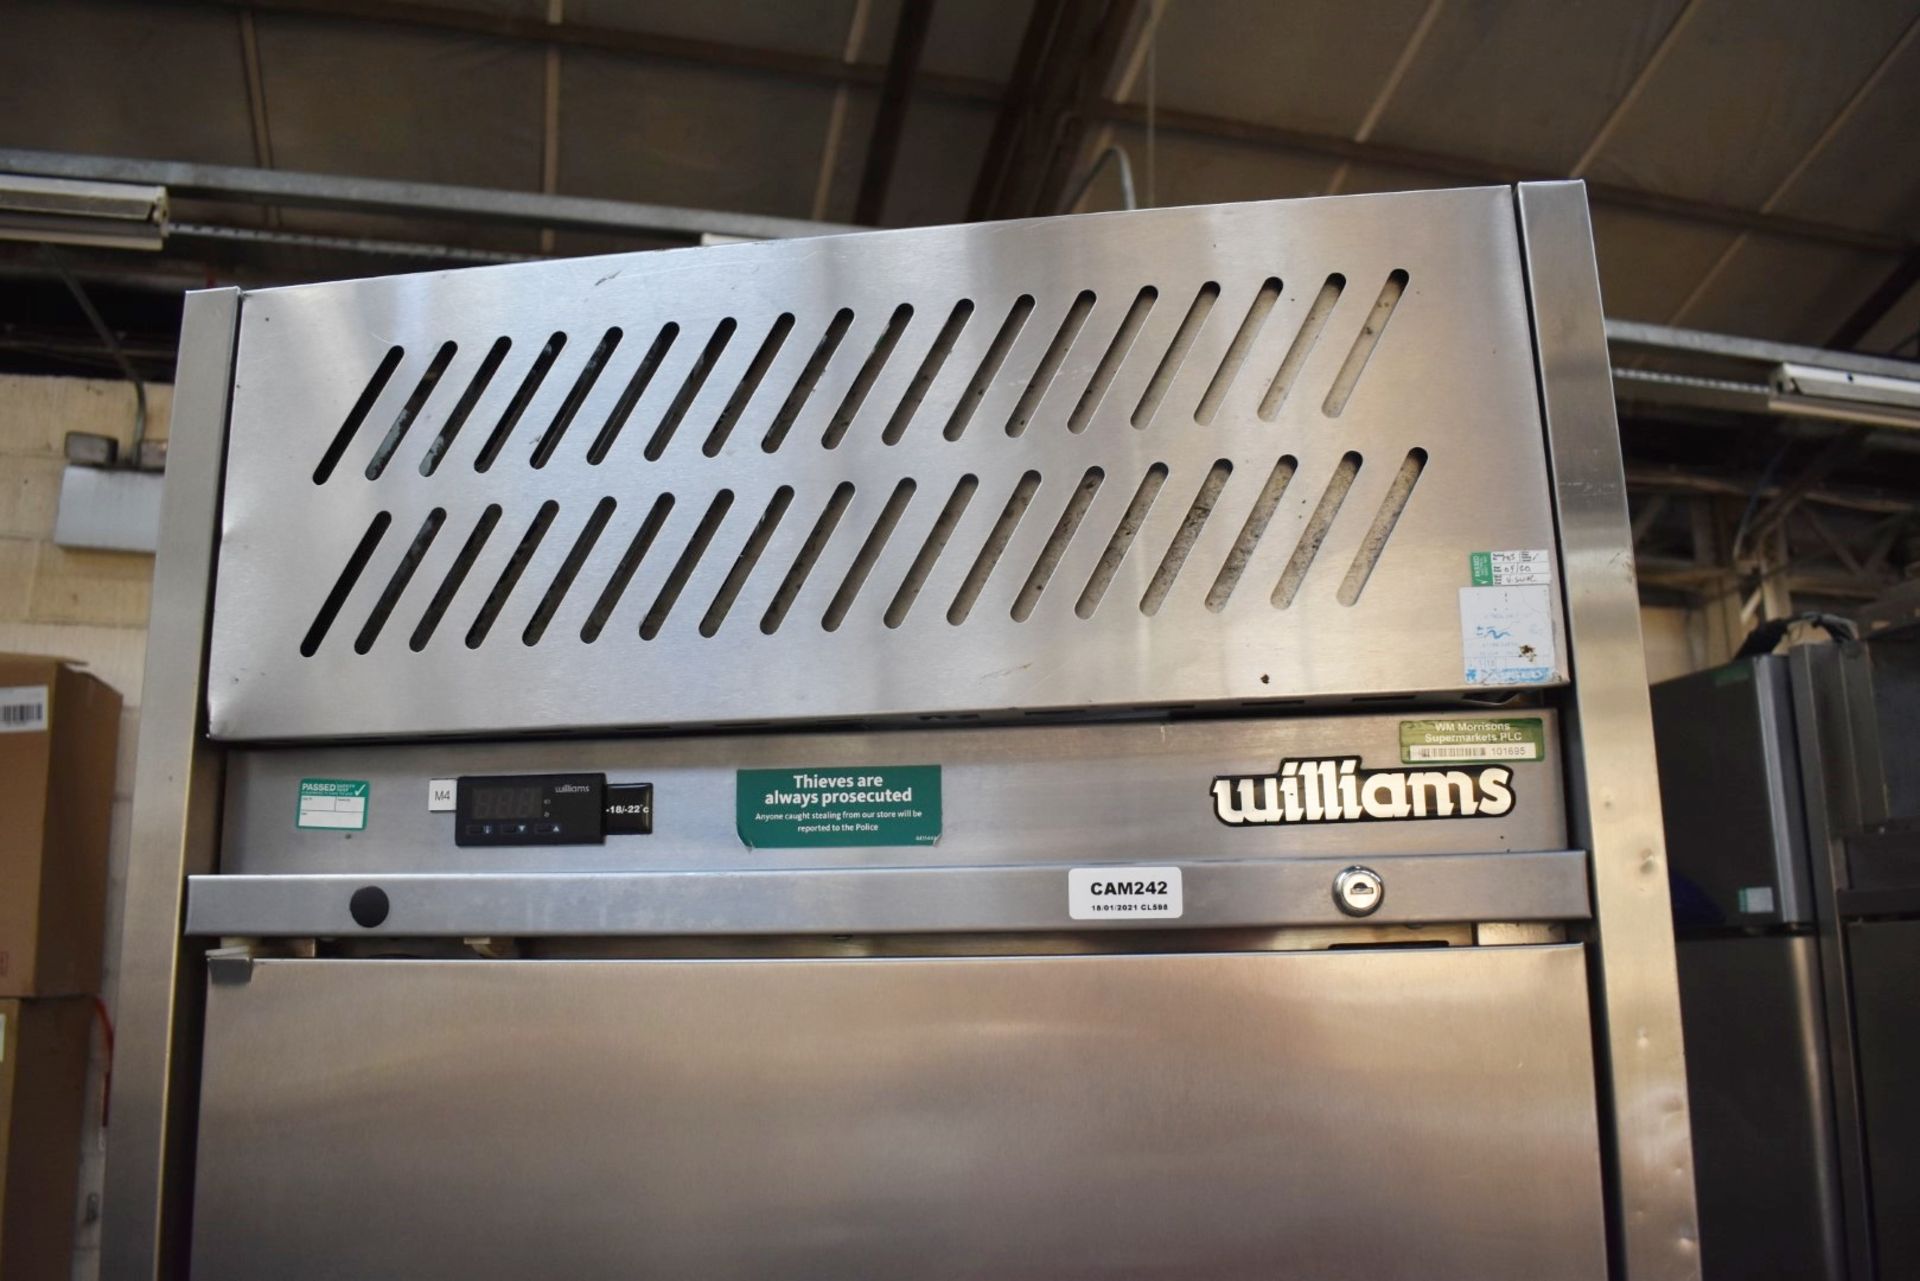 1 x Williams Jade Upright Single Door Refrigerator Stainless Steel Exterior & Internal Bakery Trays - Image 6 of 8